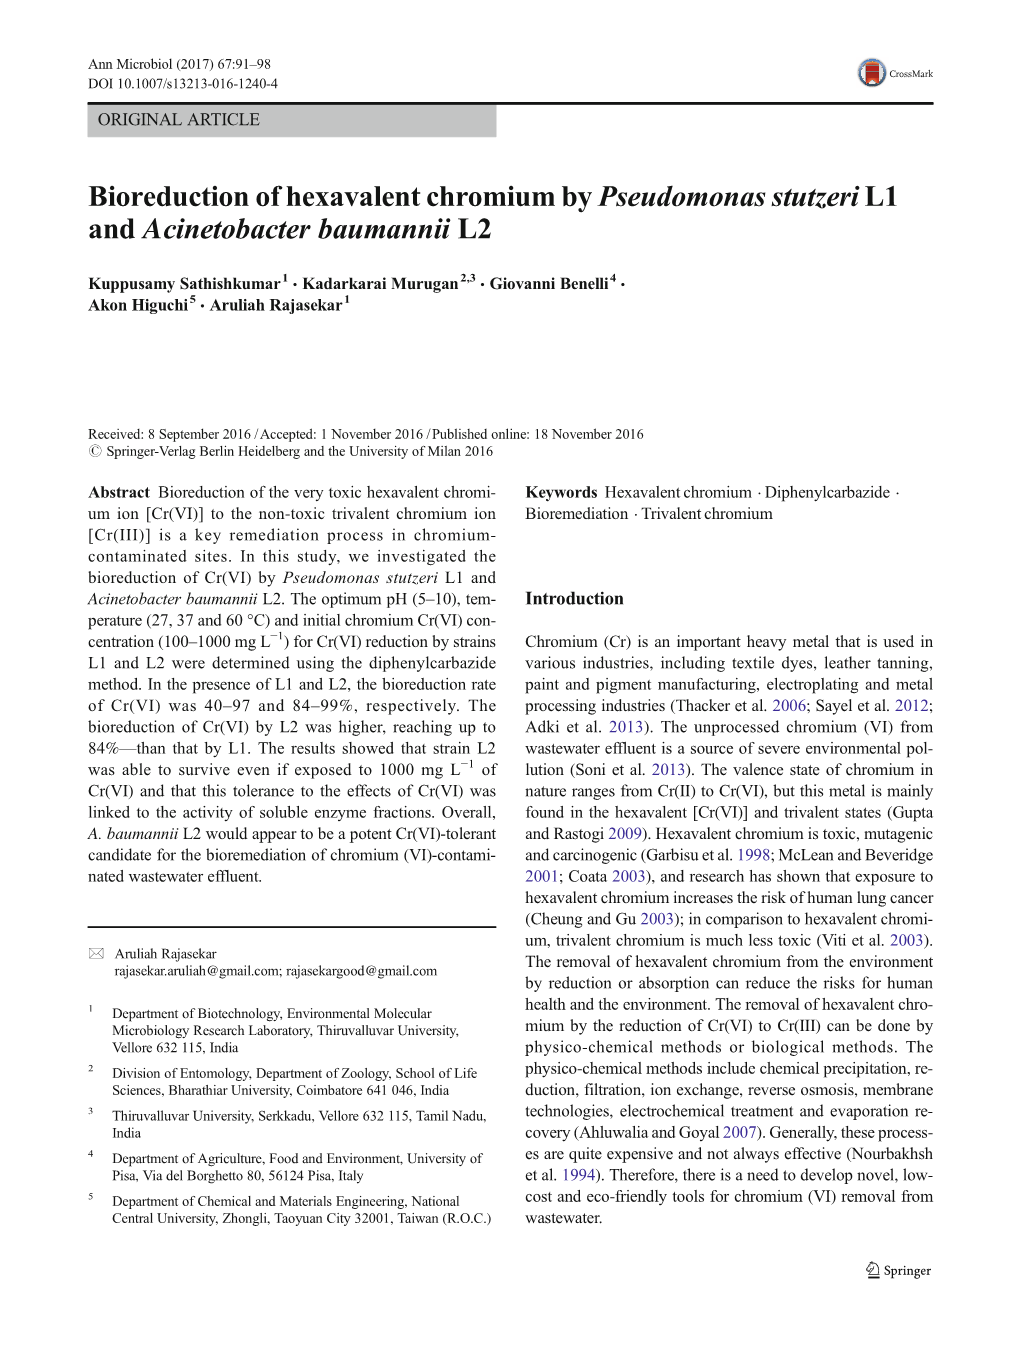 Bioreduction of Hexavalent Chromium by Pseudomonas Stutzeri L1 and Acinetobacter Baumannii L2